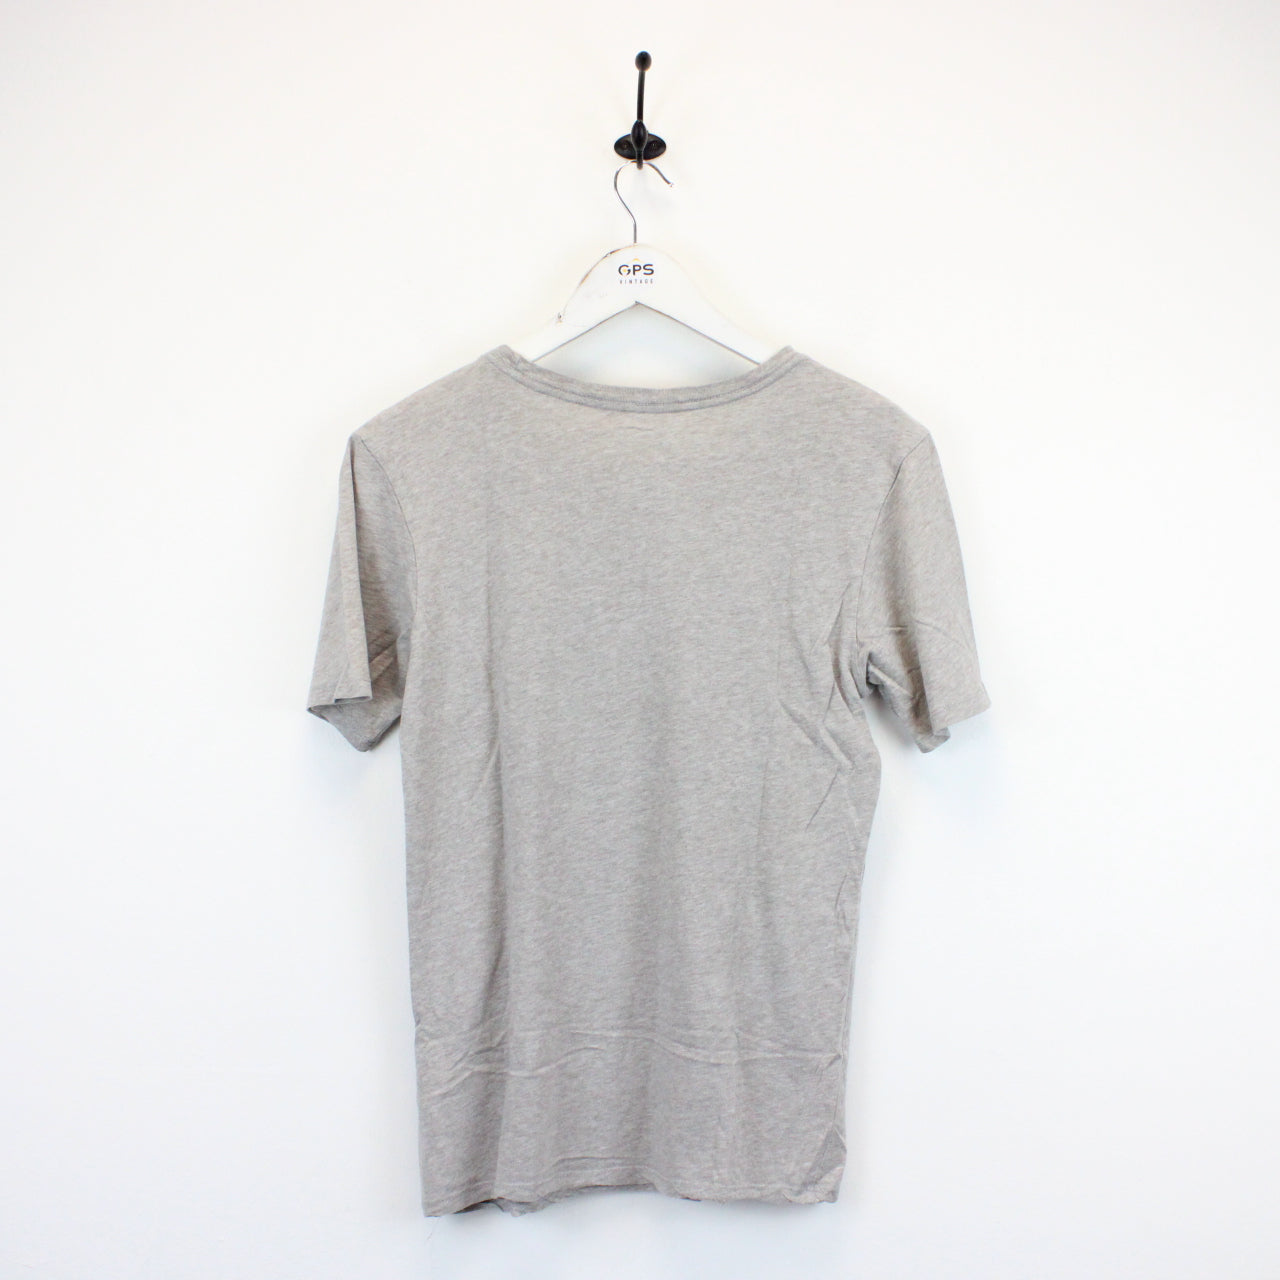 NIKE T-Shirt Grey | Small